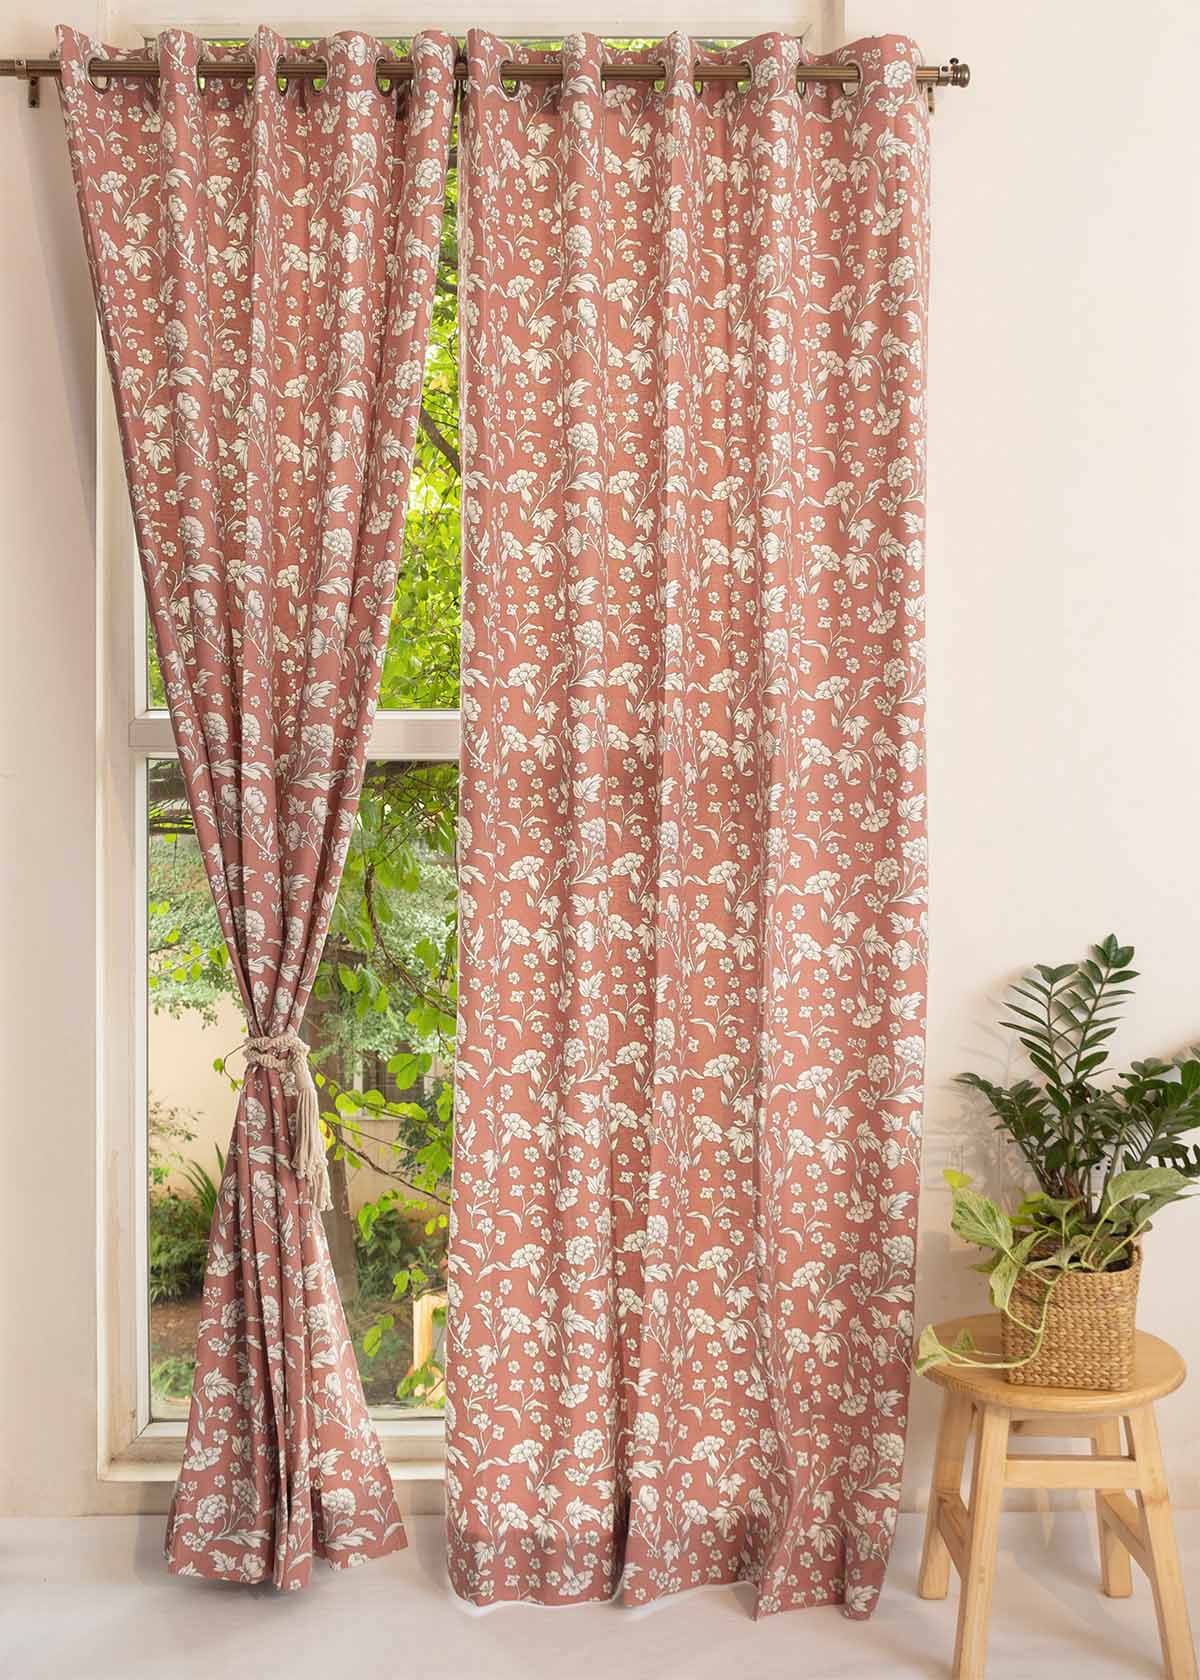 Marigold Printed Cotton curtain - Rust